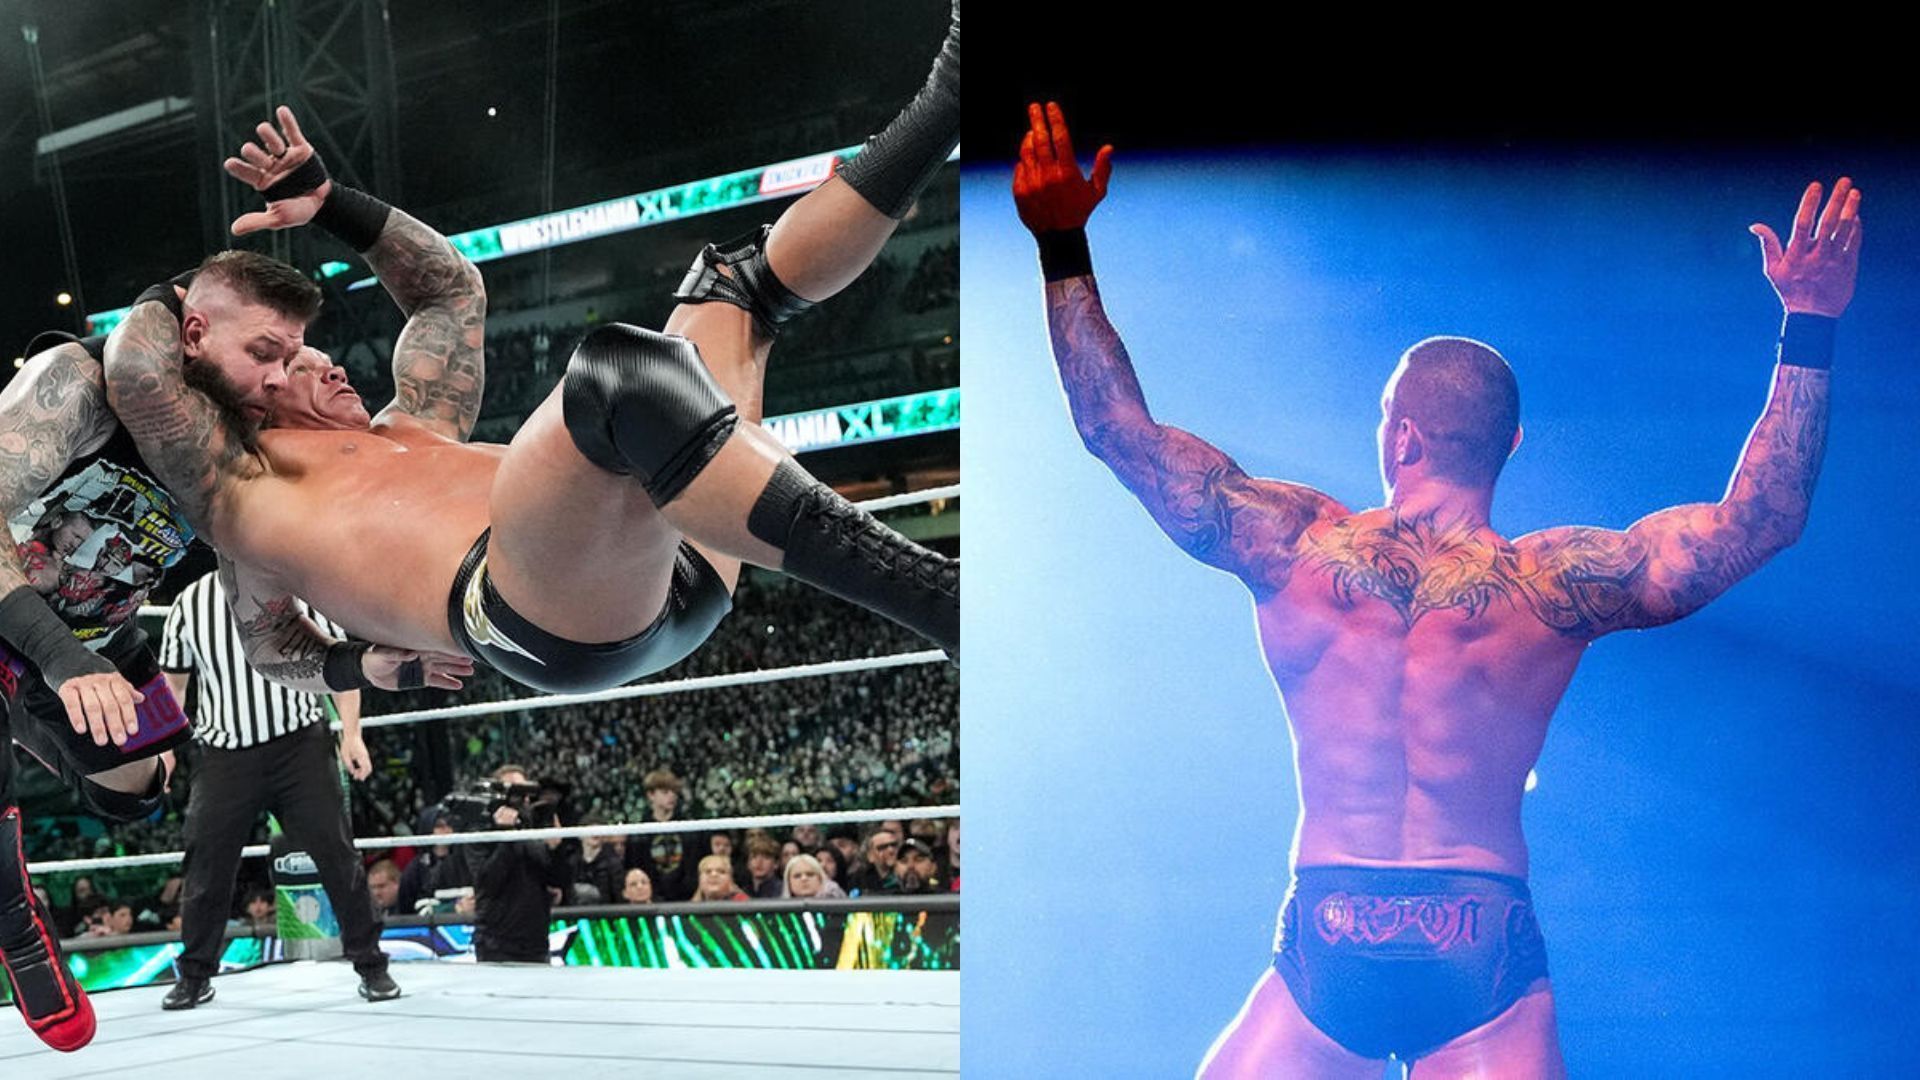 The RKO is Randy Orton